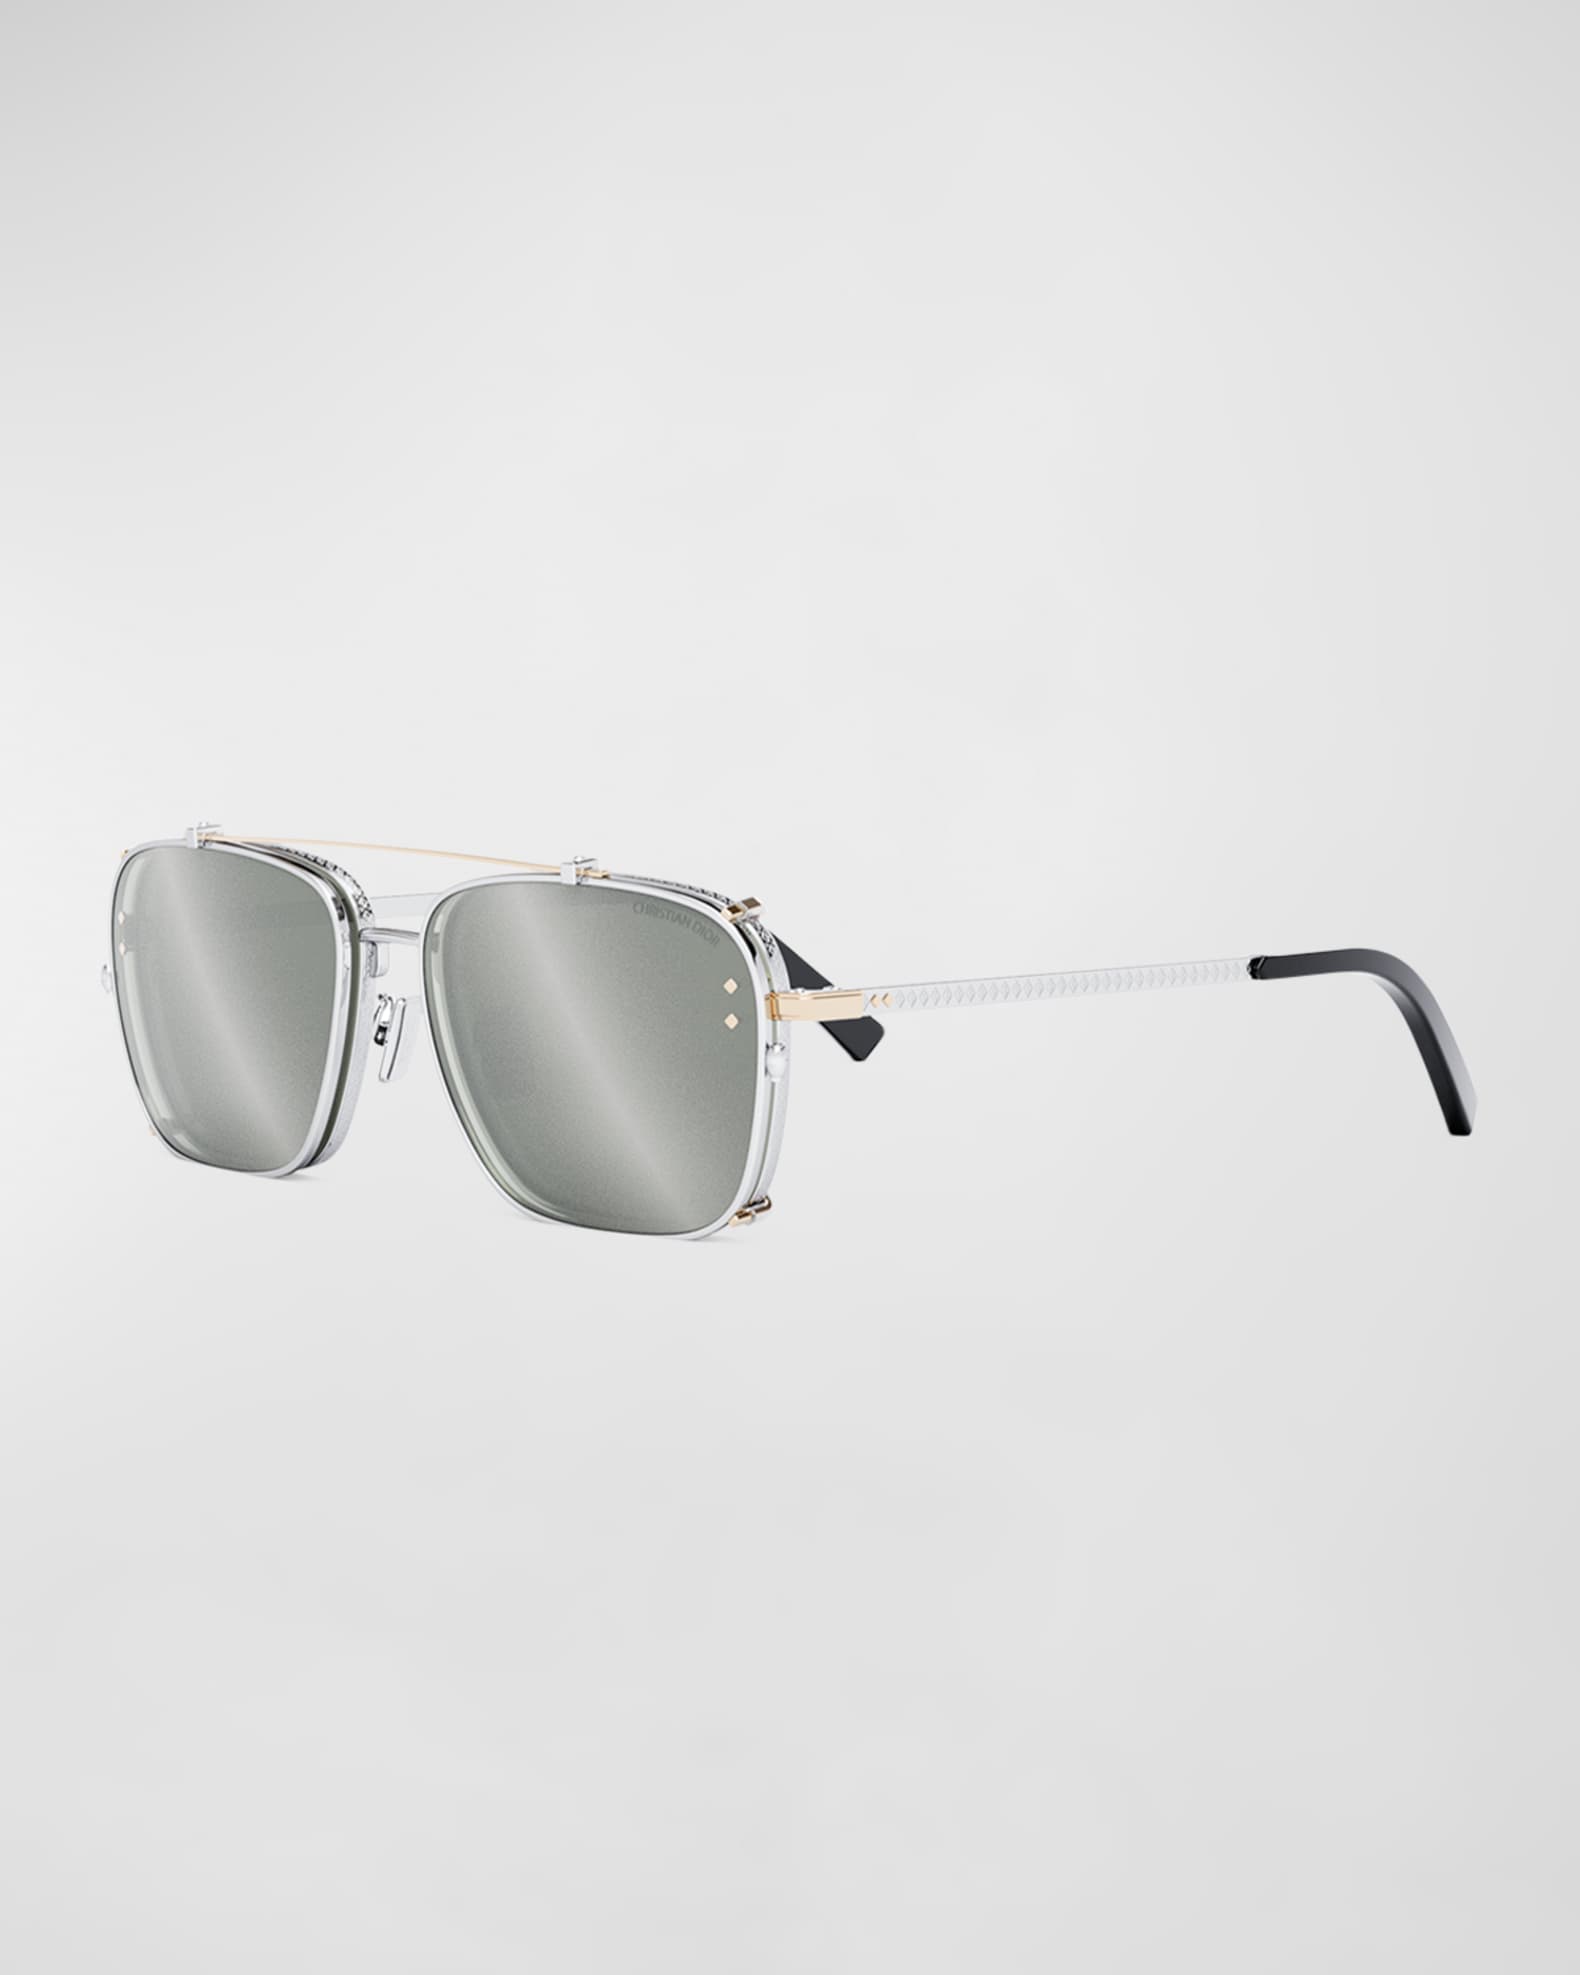 CD Diamond S 5 I Rectangular Sunglasses in Black - Dior Eyewear